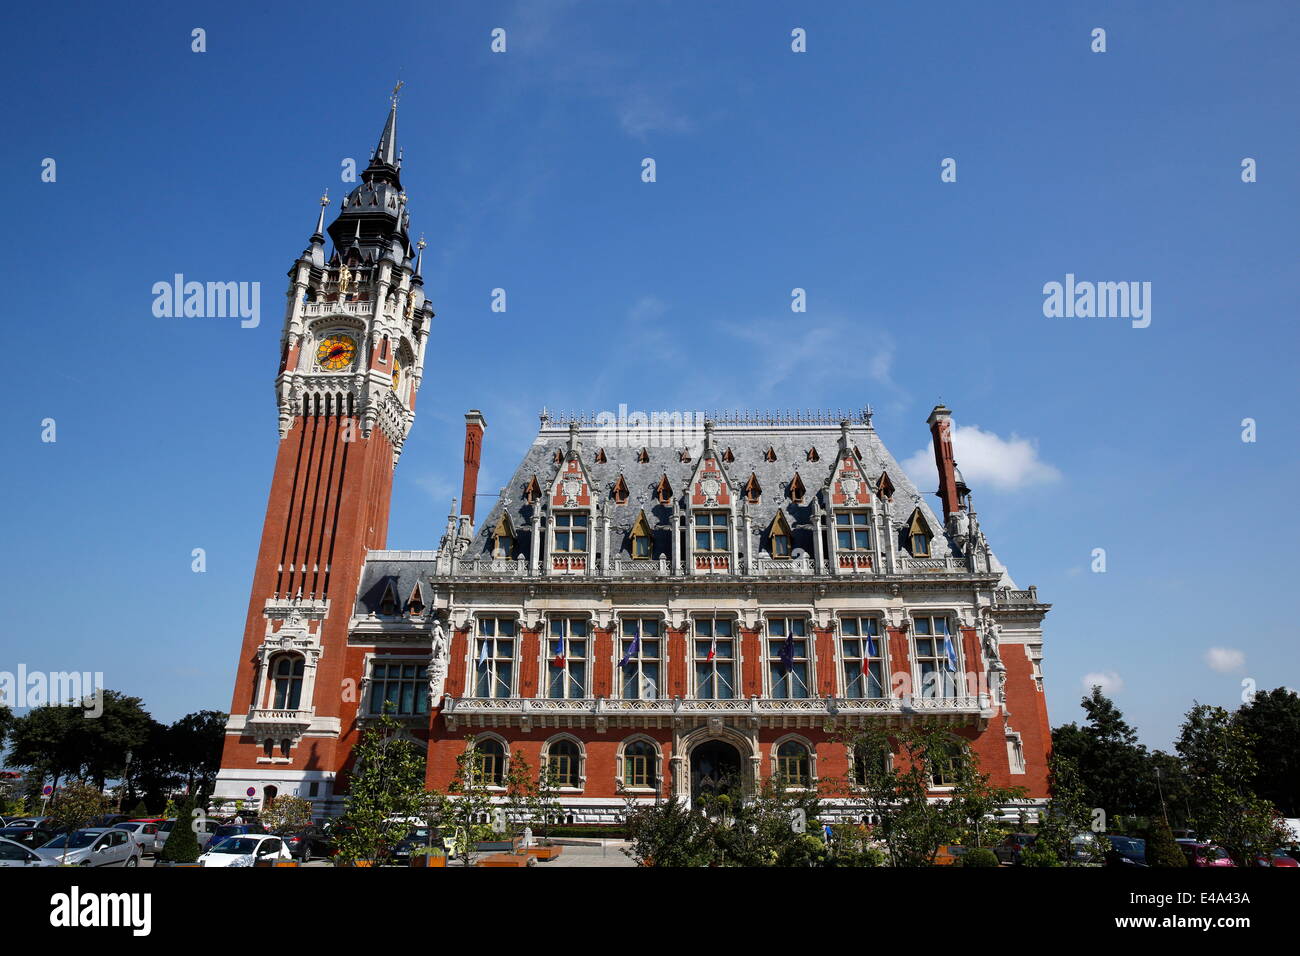 City Hall and Belfry, Calais, Pas-de-Calais, France, Europe Stock Photo